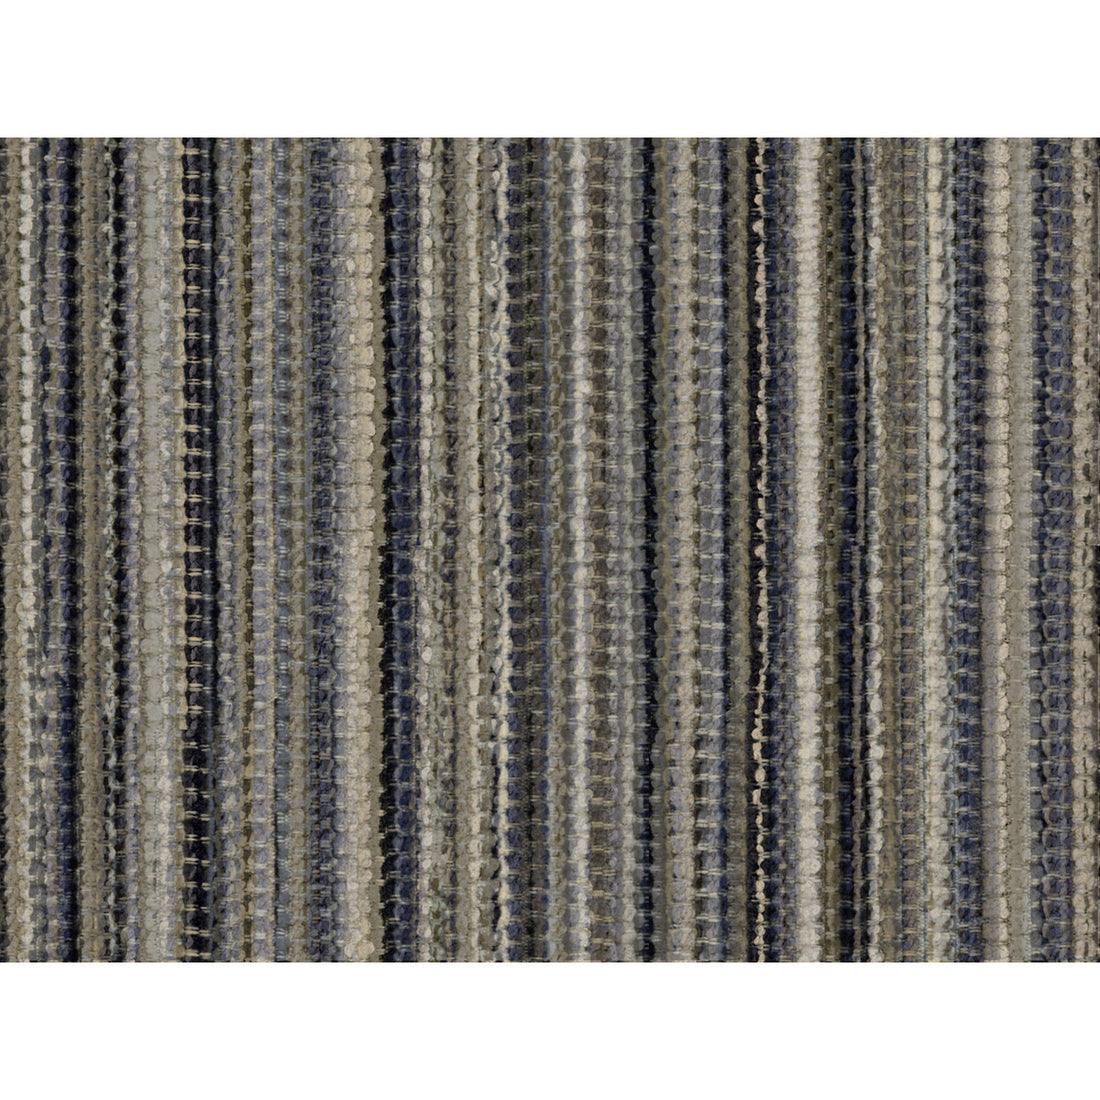 Kravet Smart fabric in 34357-516 color - pattern 34357.516.0 - by Kravet Smart